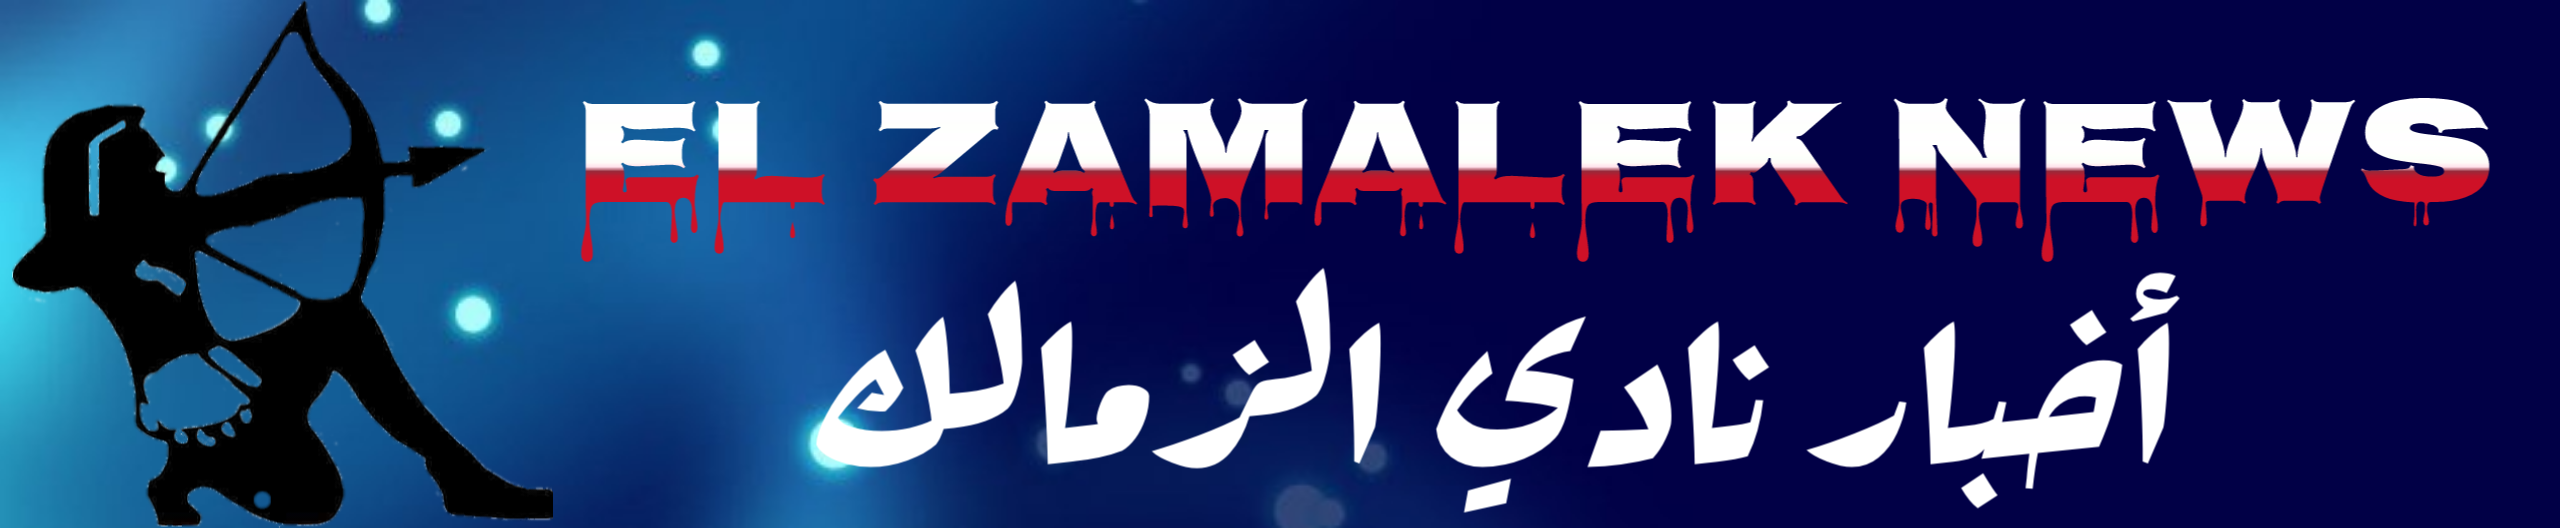 El zamalek news - اخبار نادي الزمالك 